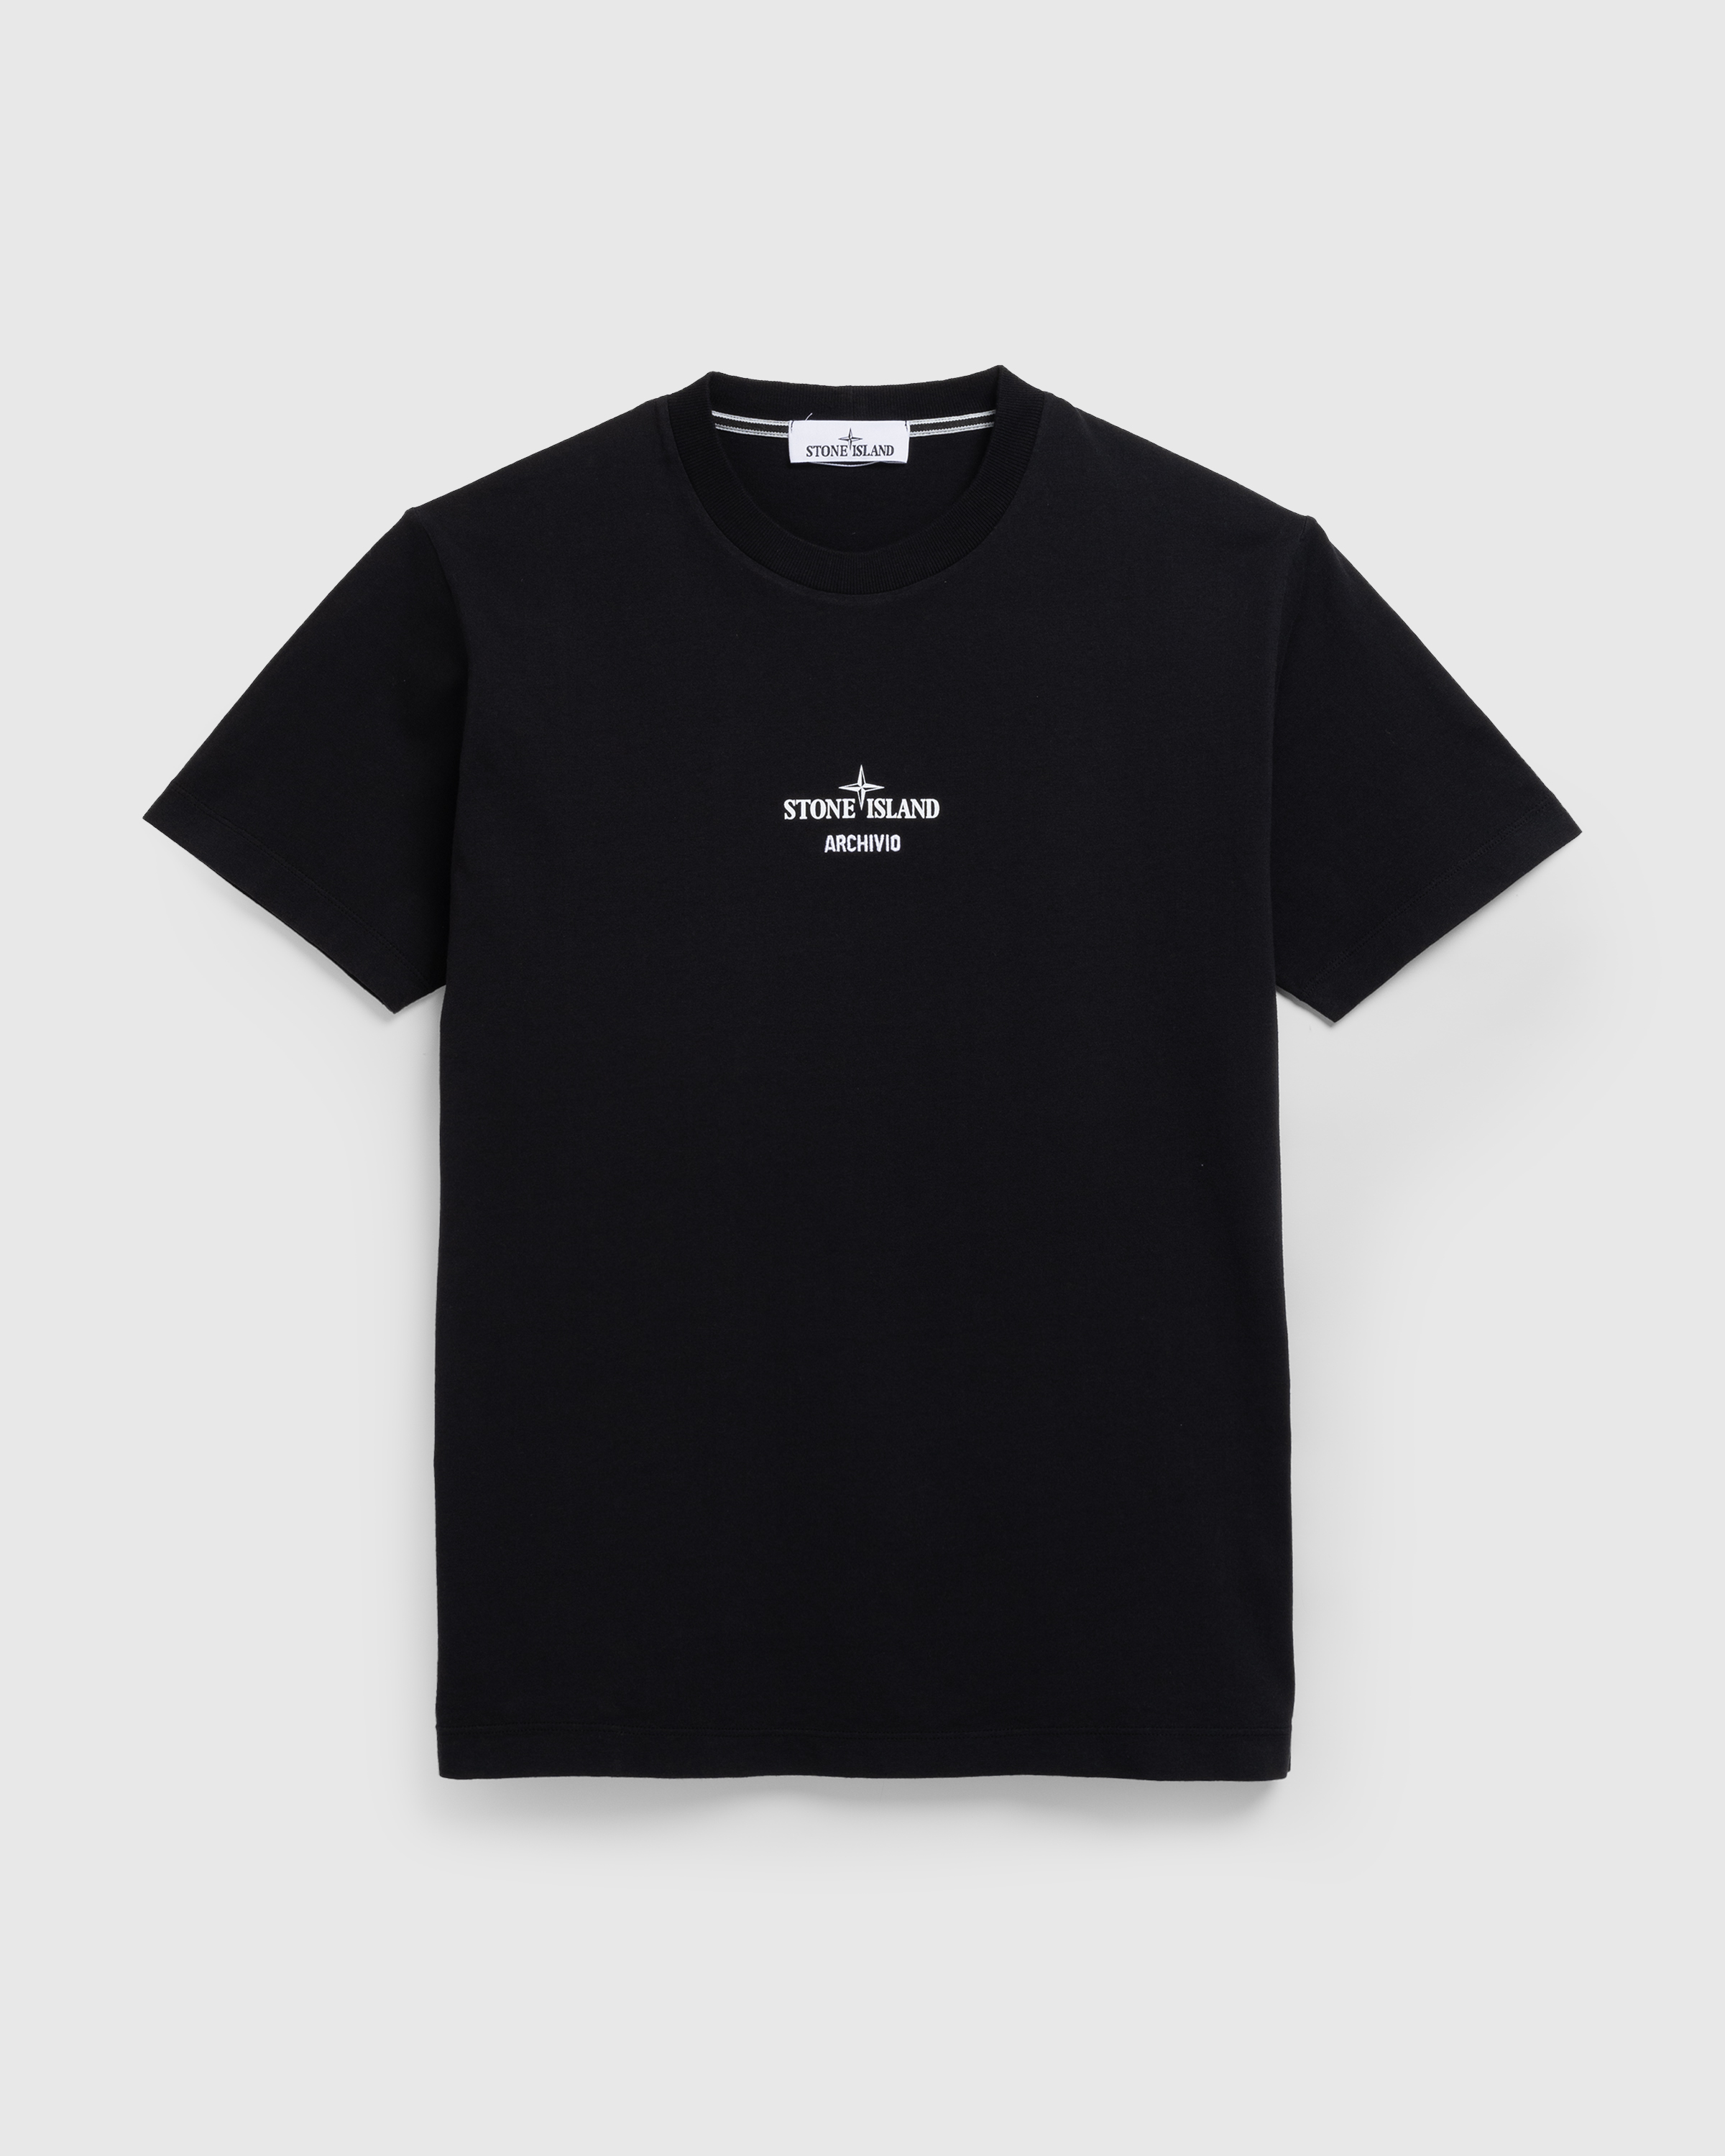 Stone Island – Archivio T-Shirt Black - T-Shirts - Black - Image 1